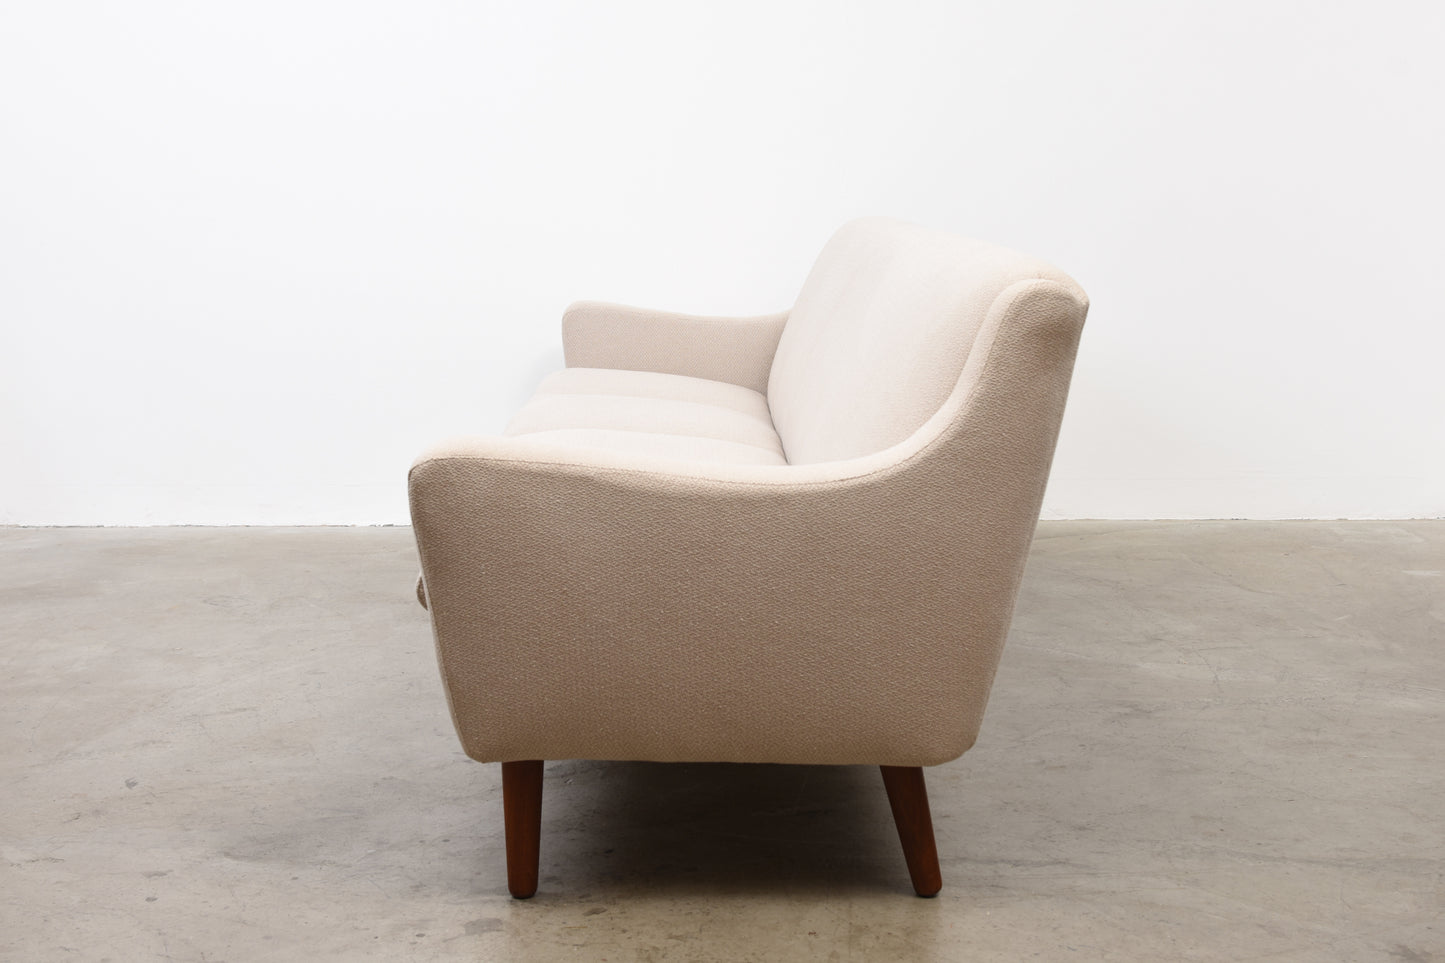 Save £300: 1960s four seat sofa by Kurt Østervig